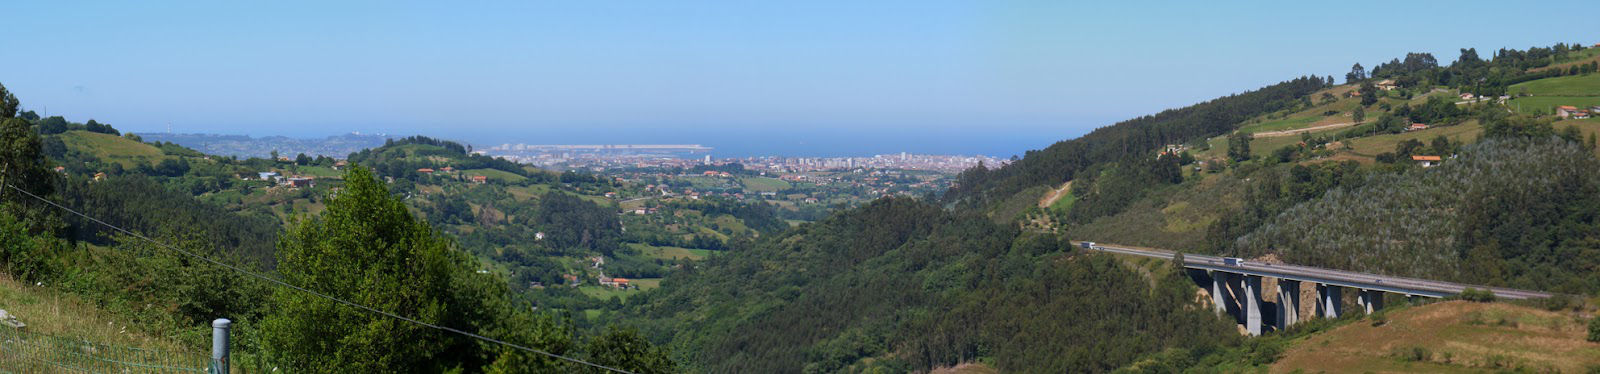 Gijón al fondo y la Autovía Minera a la dcha